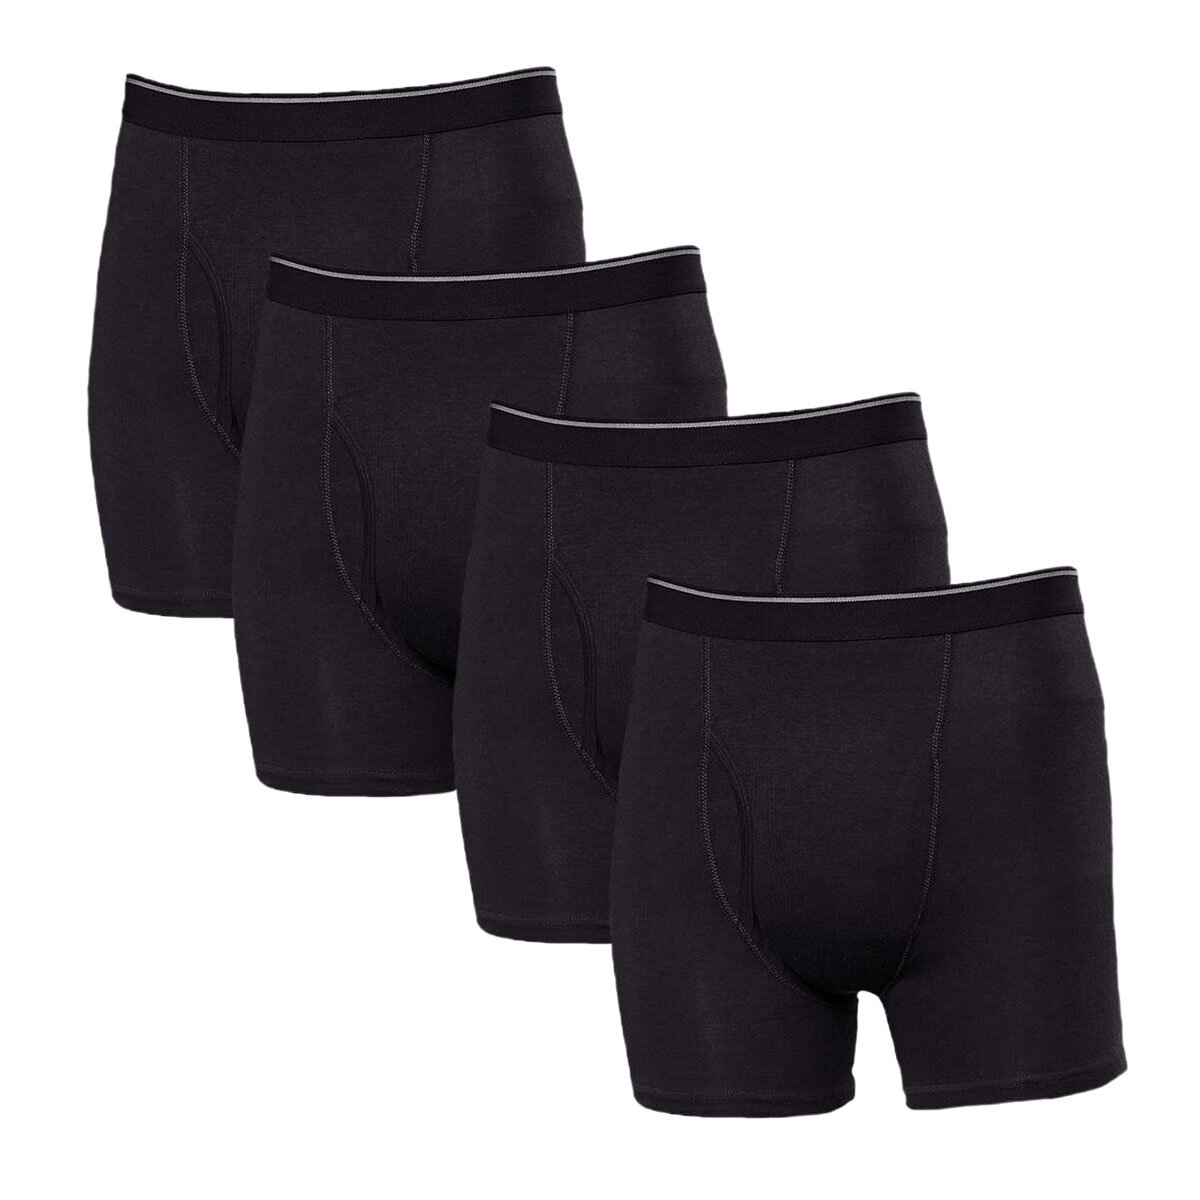 Kirkland Signature Men's 4 Pack Boxer Shorts, Medium | Co...